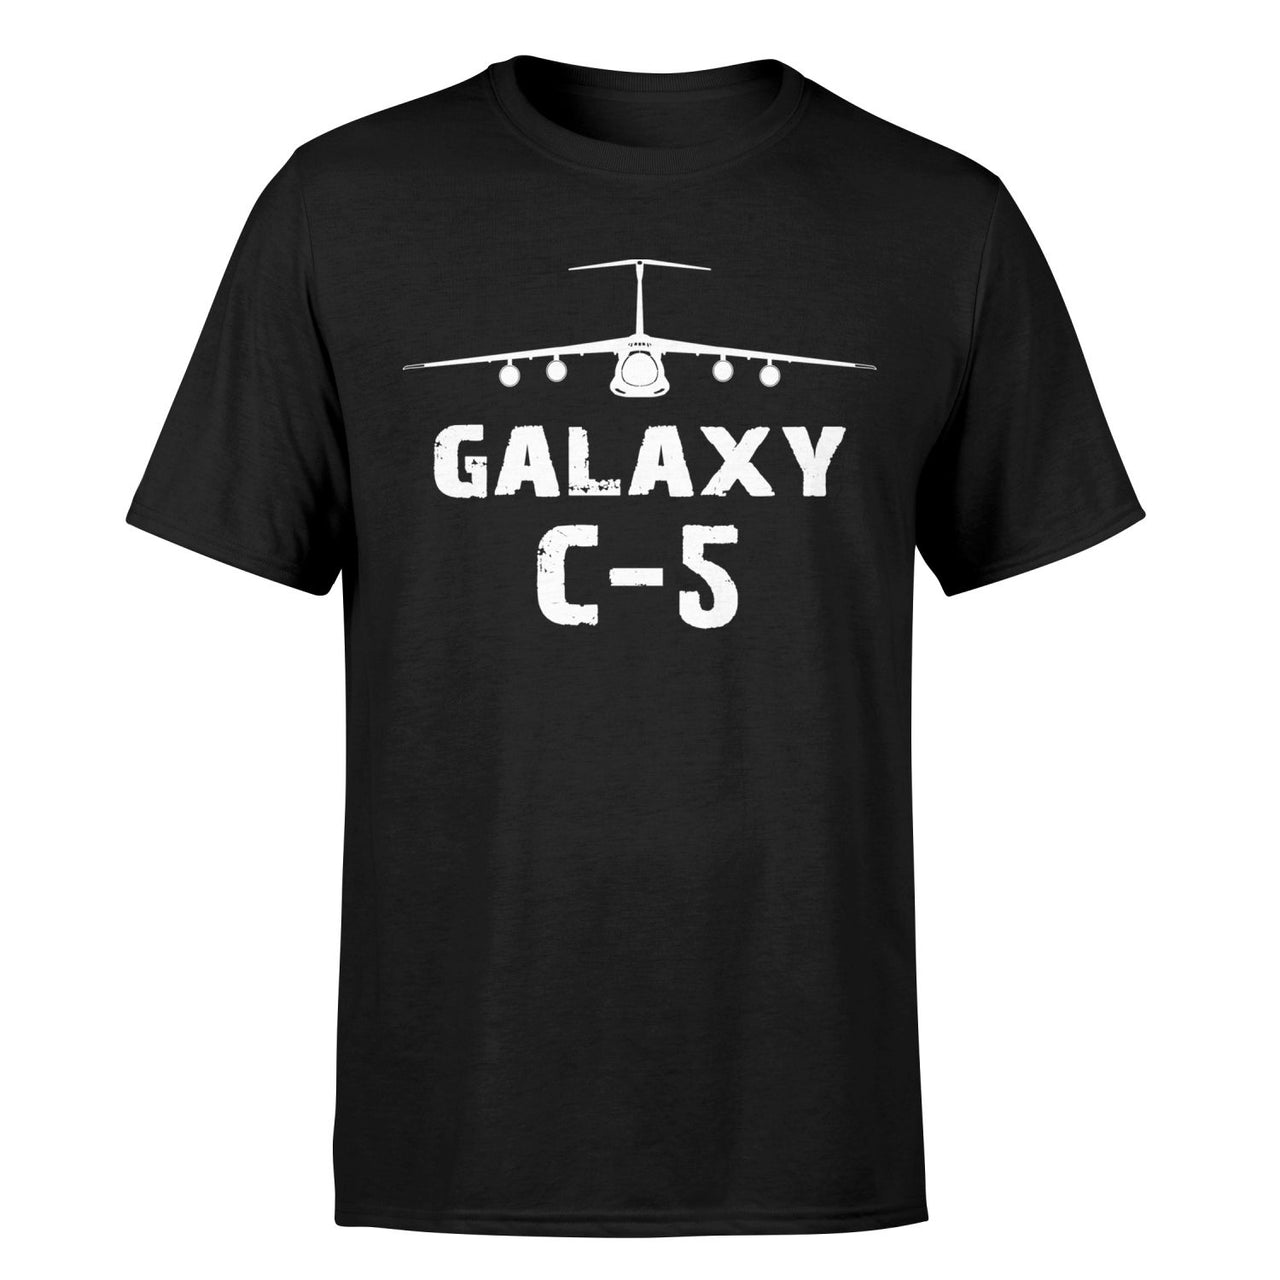 Galaxy C-5 & Plane Designed T-Shirts